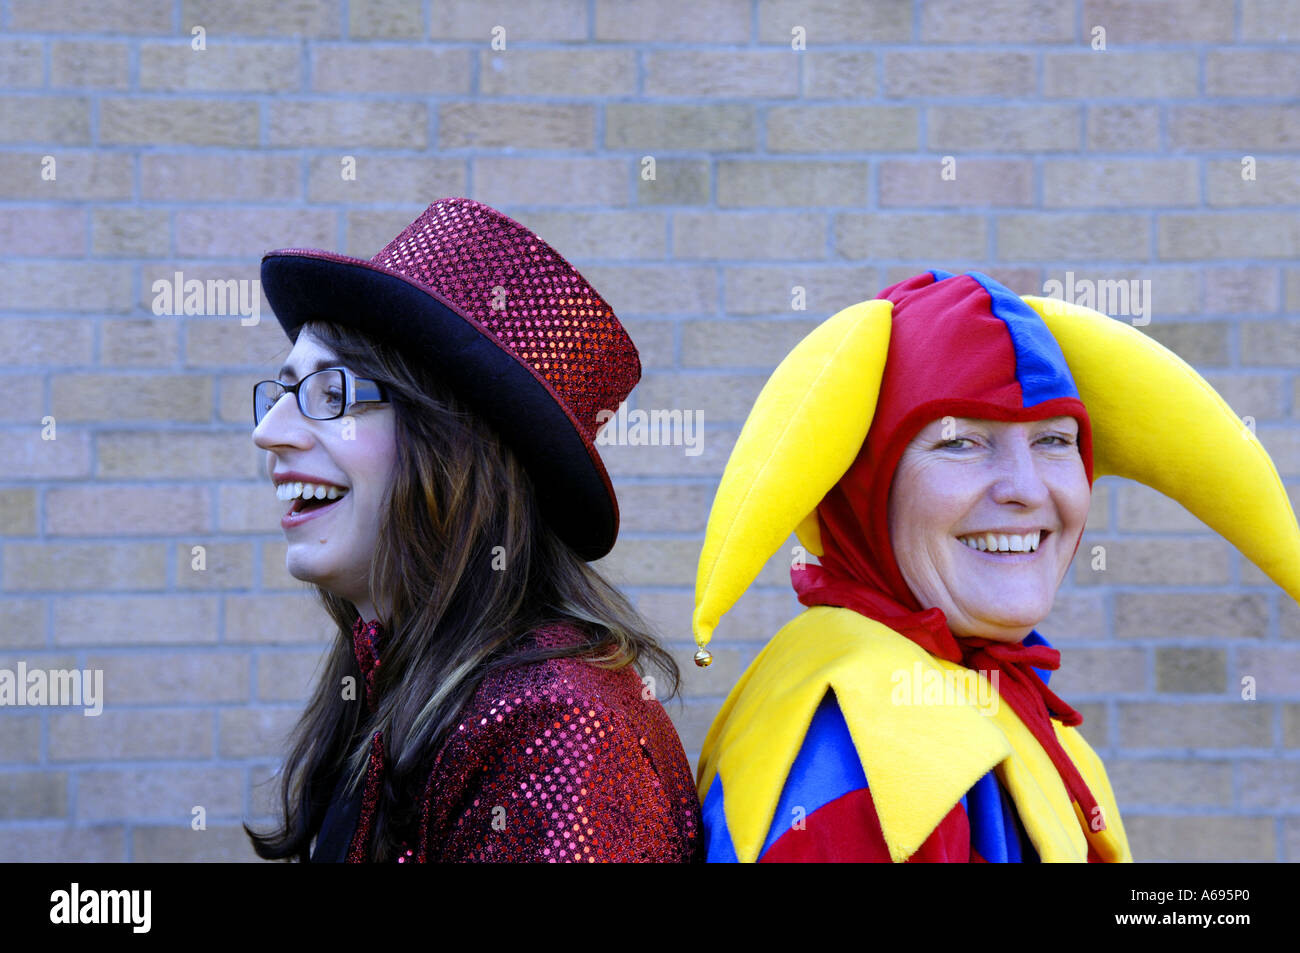 Frauen Frauen Kostüm Kostüm Karneval Carniva Feier horizontale Nahaufnahme  Gesichter Portraits Köpfe zwei Lehrer Zylinder r Stockfotografie - Alamy